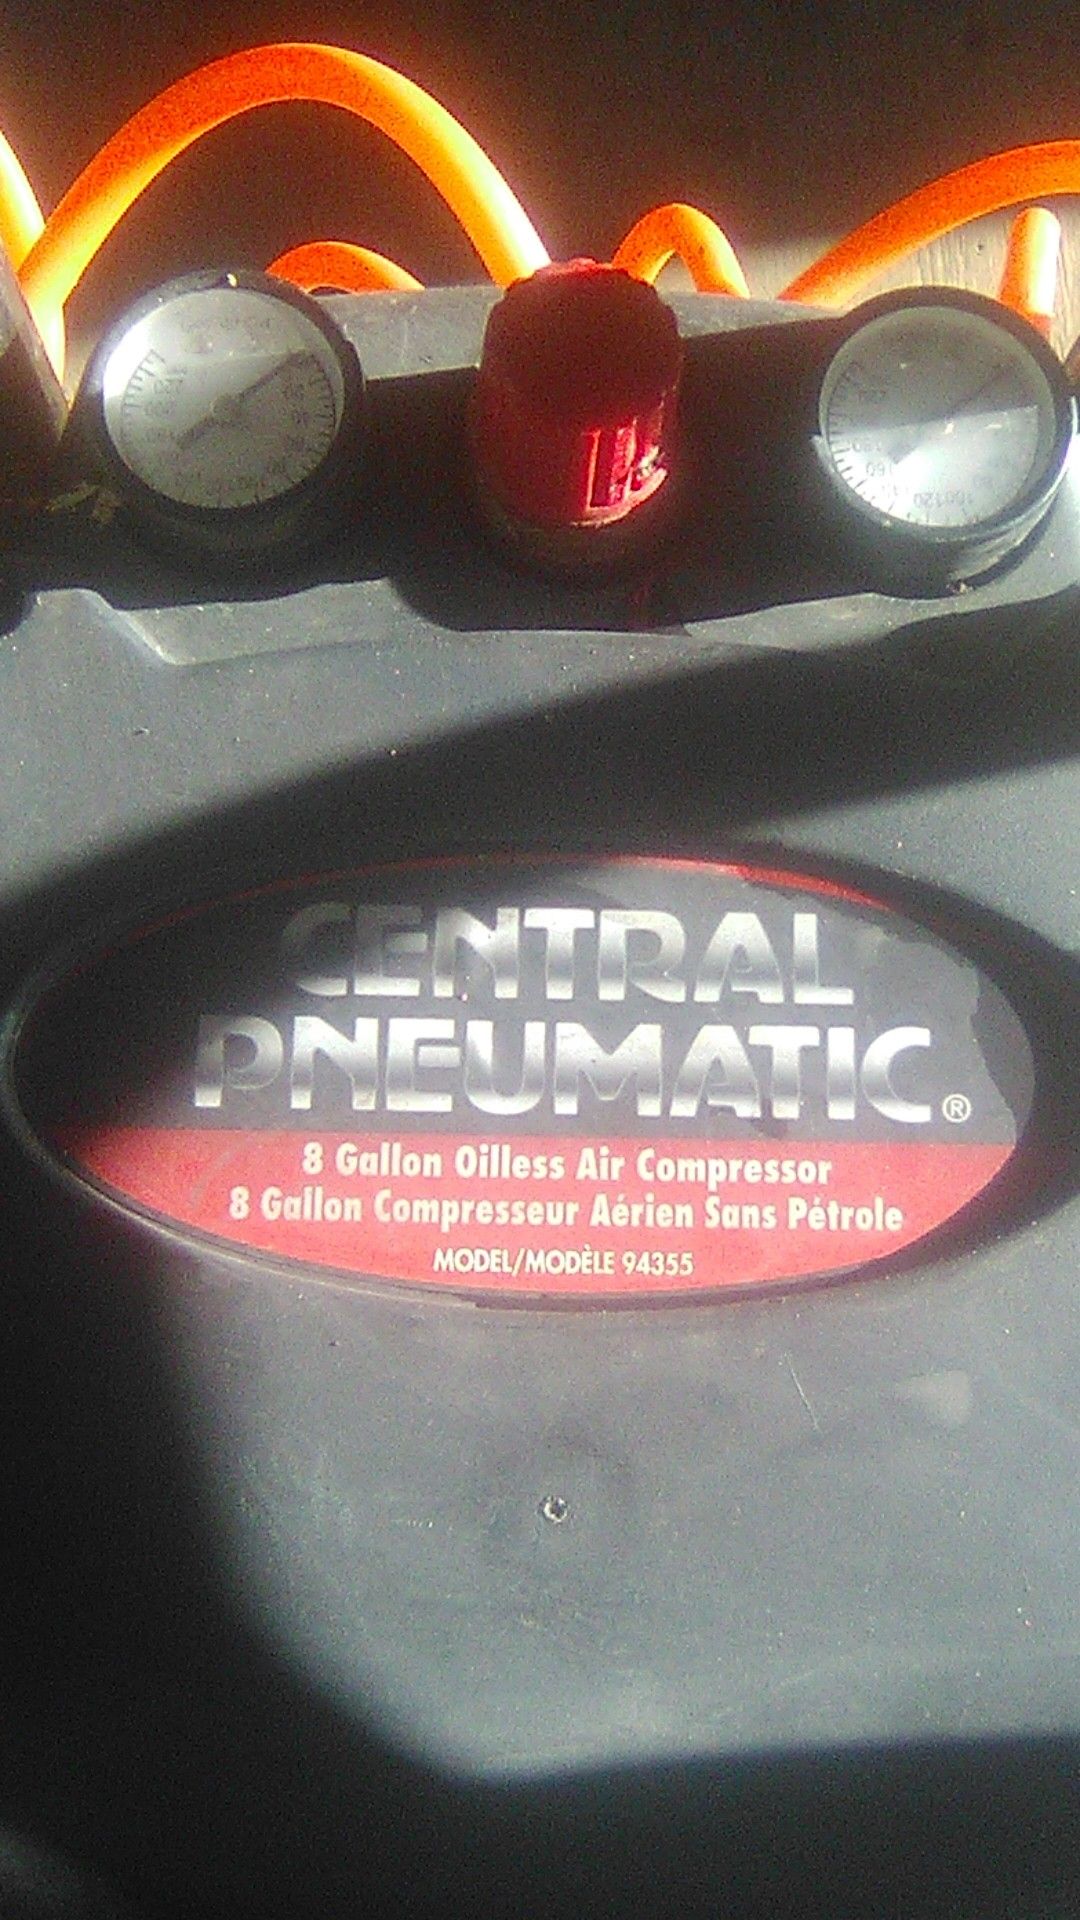 Air compressor 8 gallon Central peneumatic